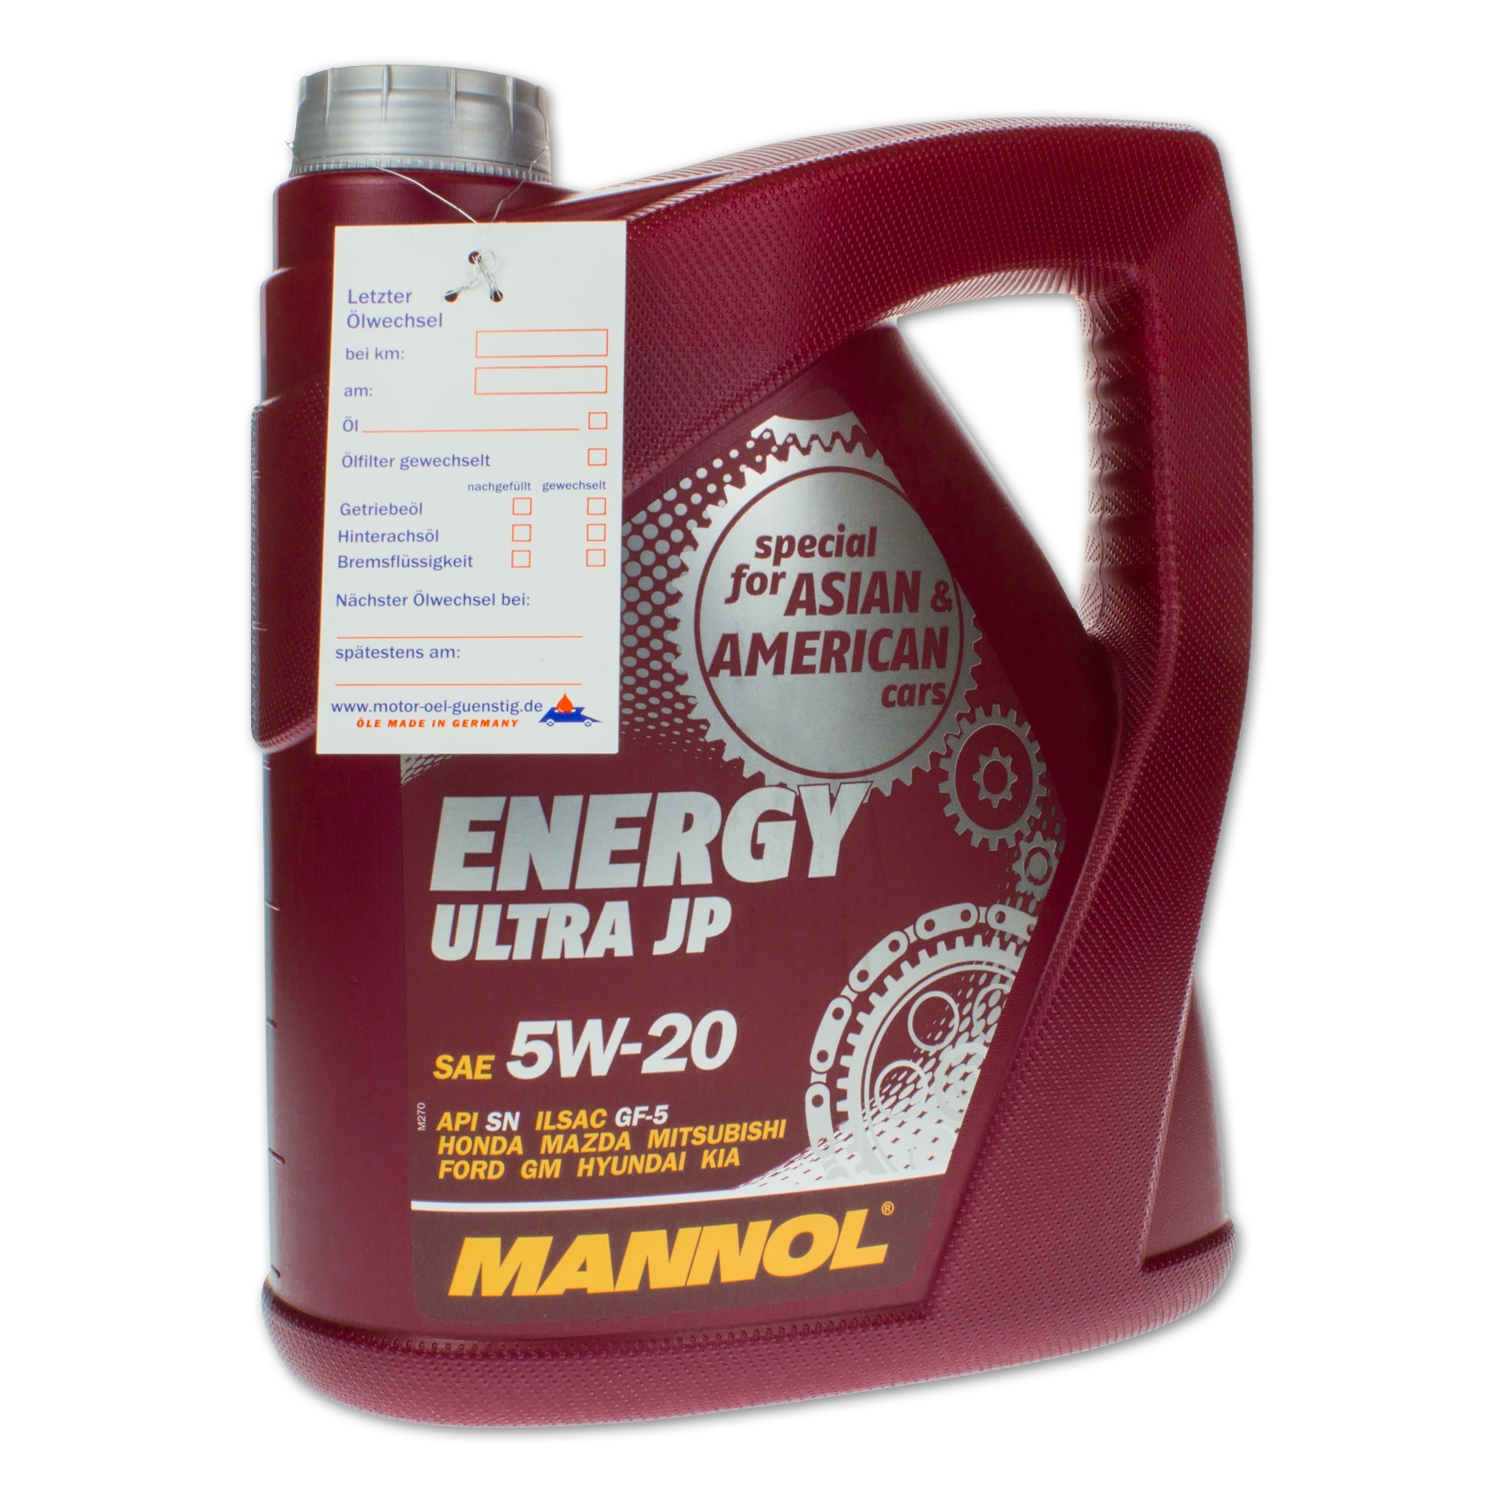 Energy Ultra JP Mannol